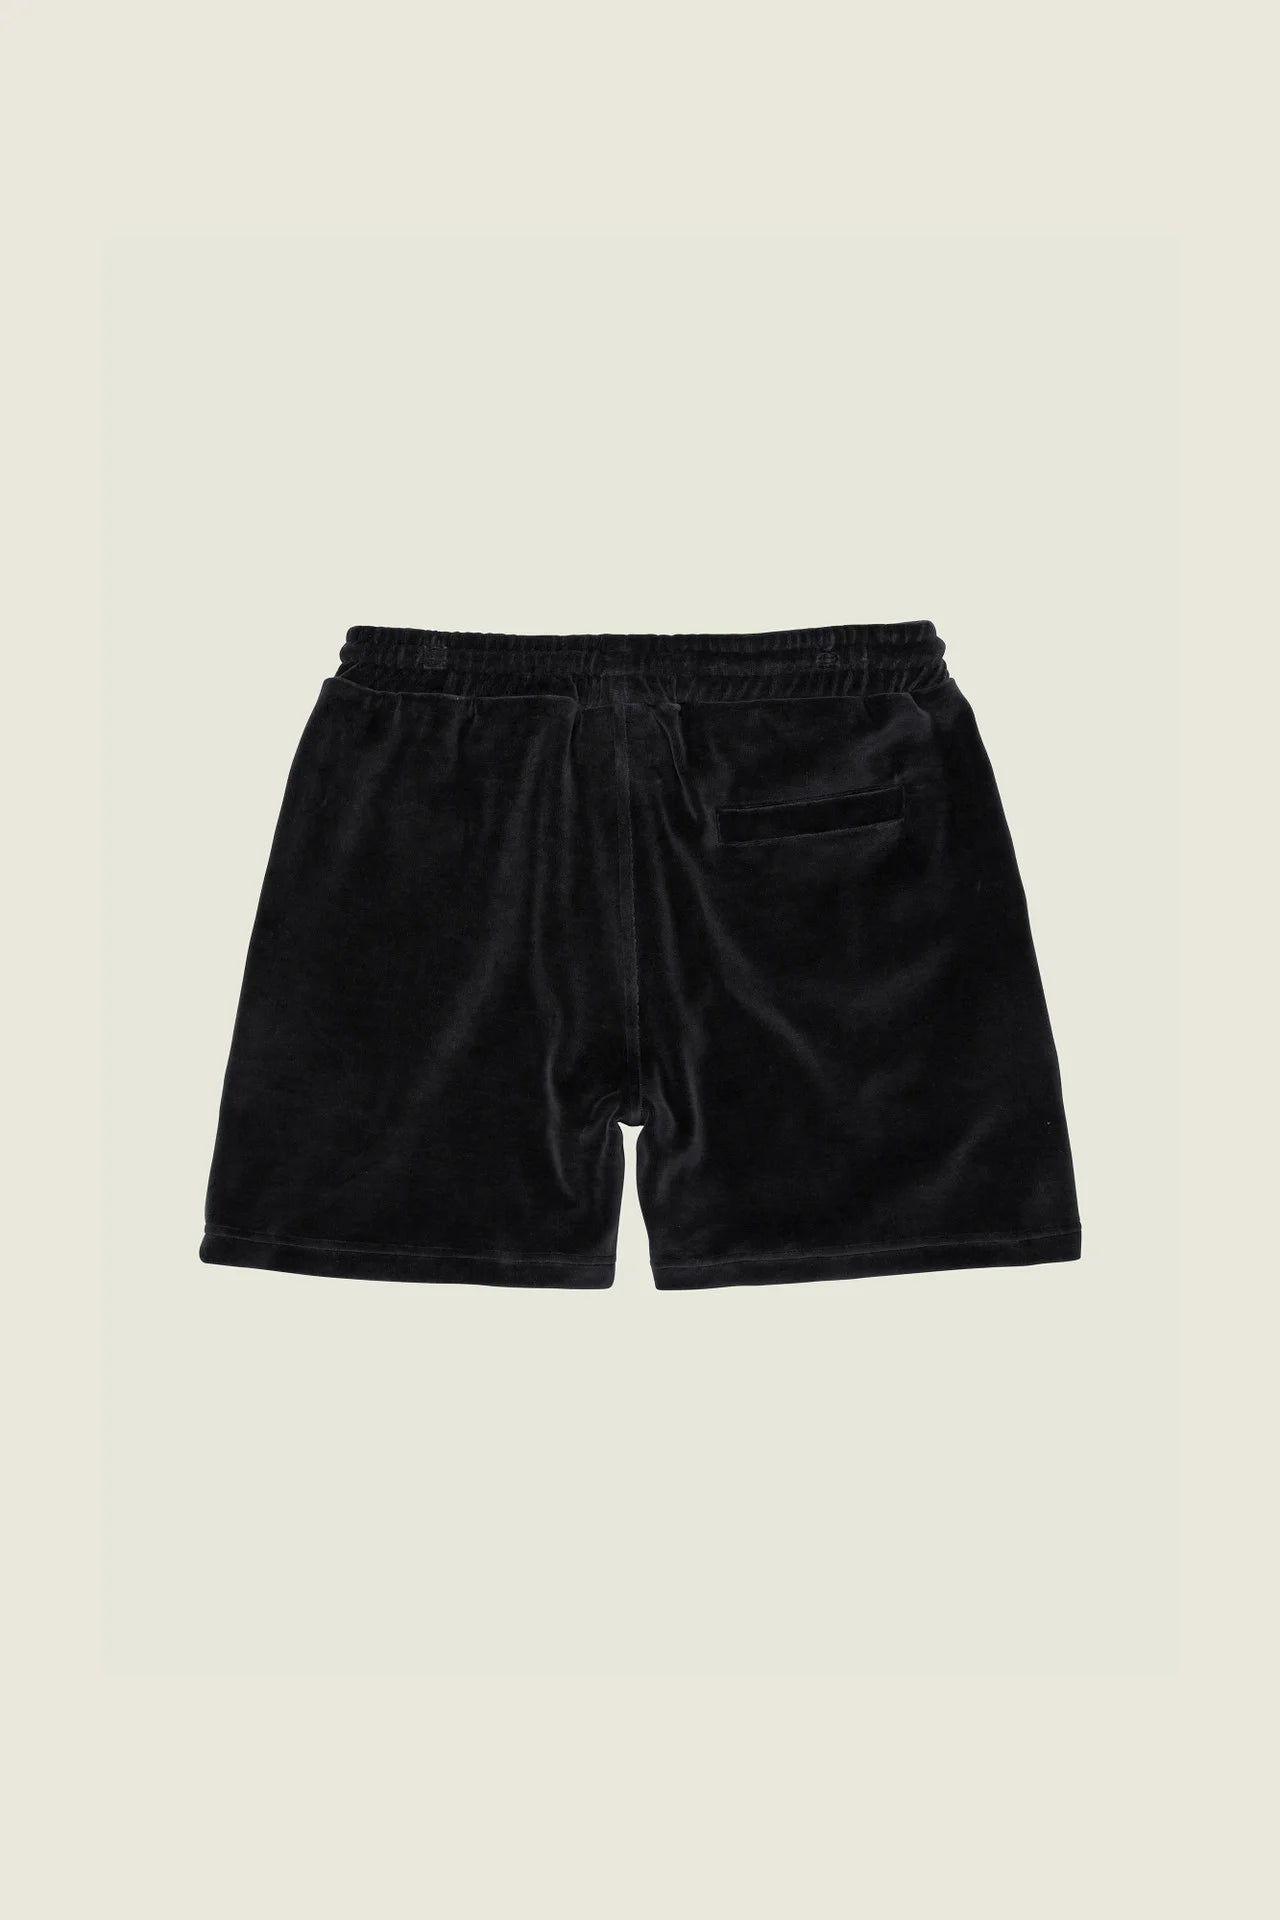 Oas Nearly Black Velour Shorts